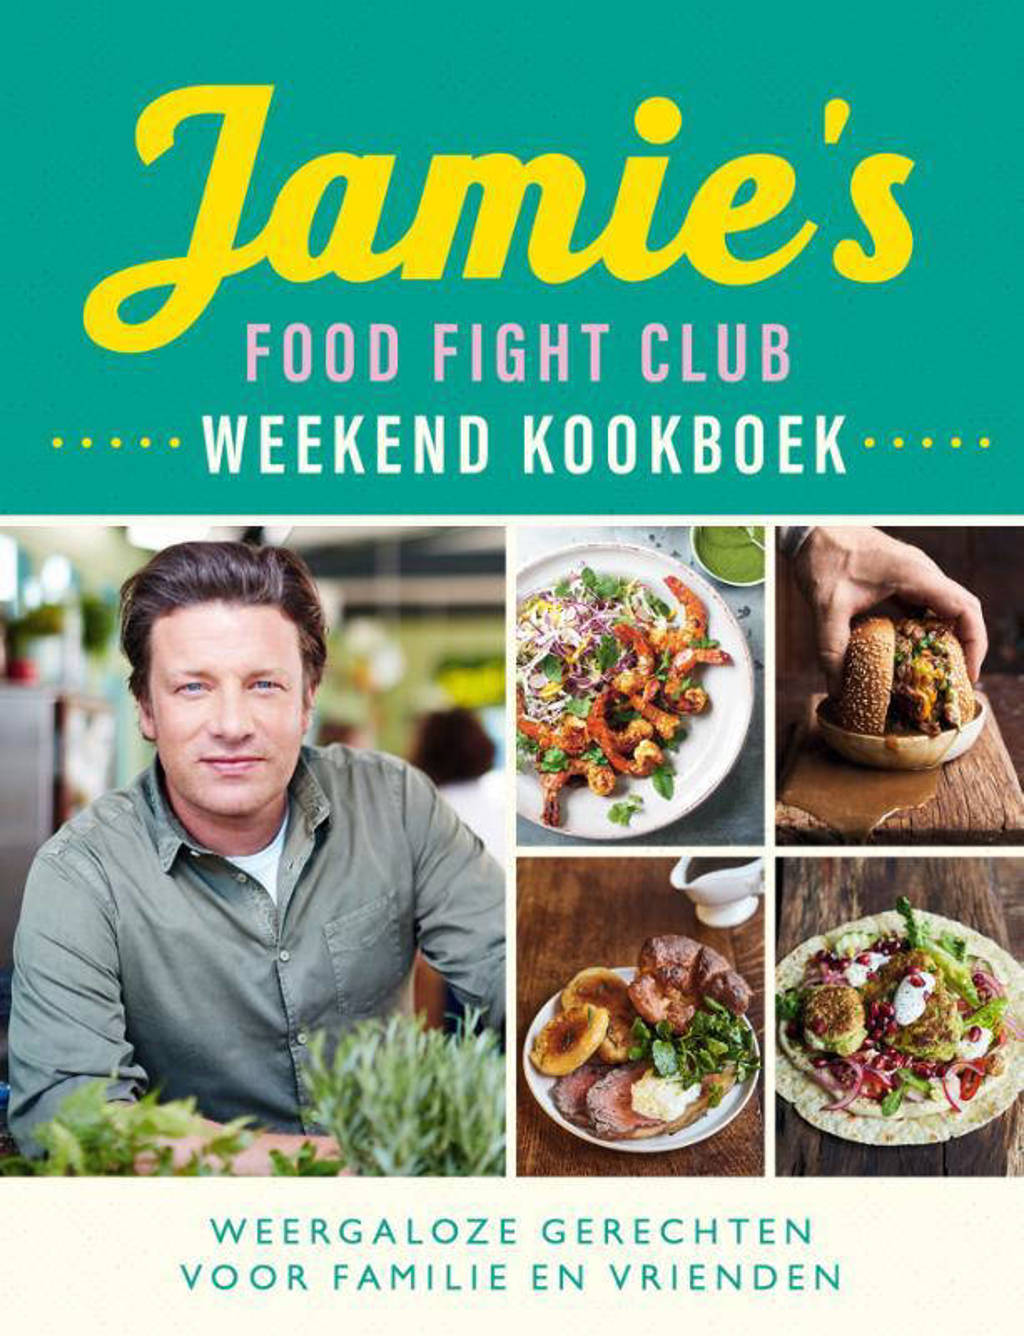 Sneeuwwitje Lounge kwaadaardig Jamie Oliver Jamie's Food Fight Club weekend kookboek | wehkamp